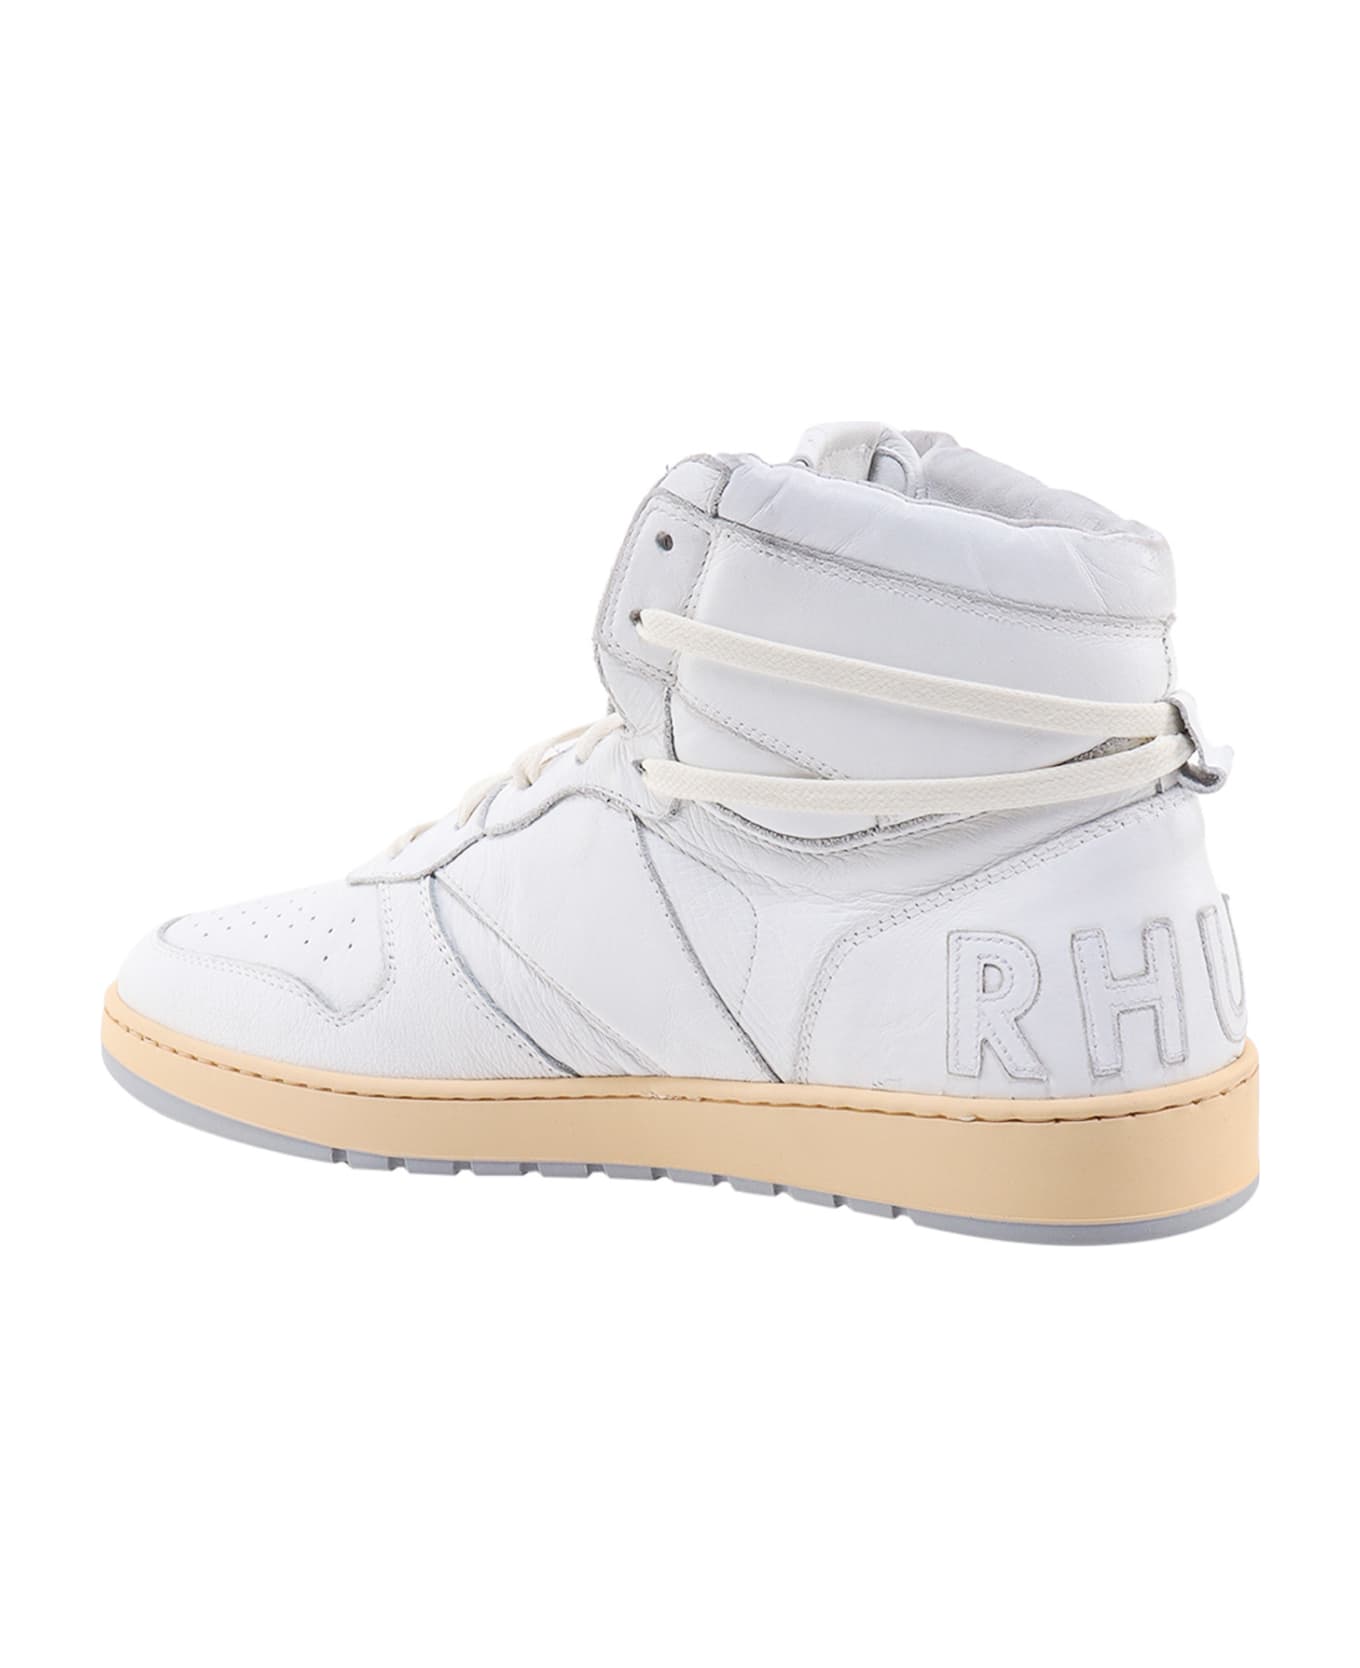 Rhude Rhecess Hi Sneakers - White スニーカー